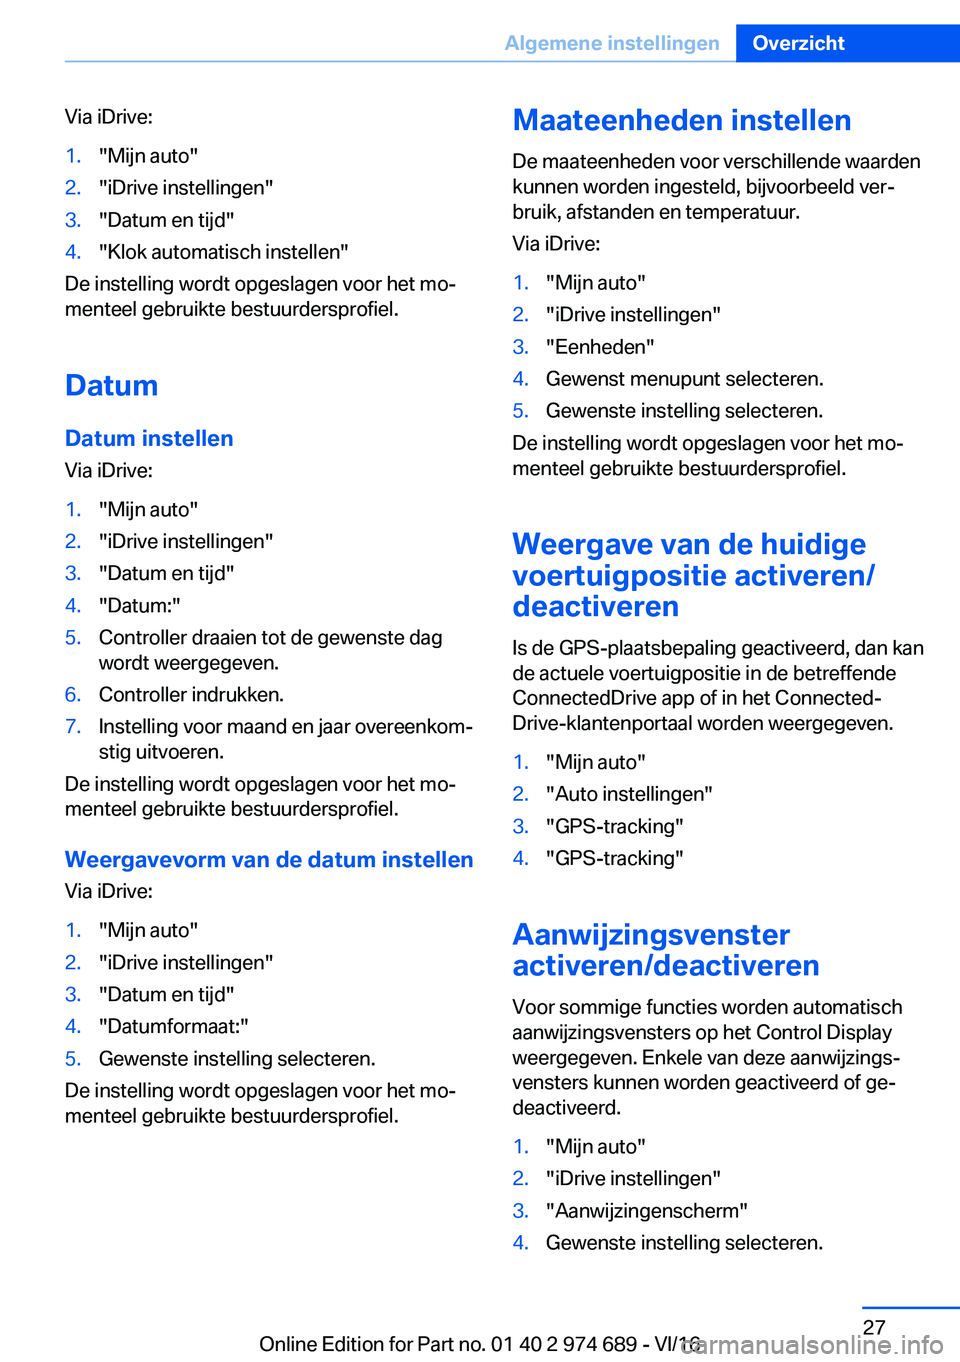 BMW M2 2017  Instructieboekjes (in Dutch) �V�i�a� �i�D�r�i�v�e�:�1�.�"�M�i�j�n� �a�u�t�o�"�2�.�"�i�D�r�i�v�e� �i�n�s�t�e�l�l�i�n�g�e�n�"�3�.�"�D�a�t�u�m� �e�n� �t�i�j�d�"�4�.�"�K�l�o�k� �a�u�t�o�m�a�t�i�s�c�h� �i�n